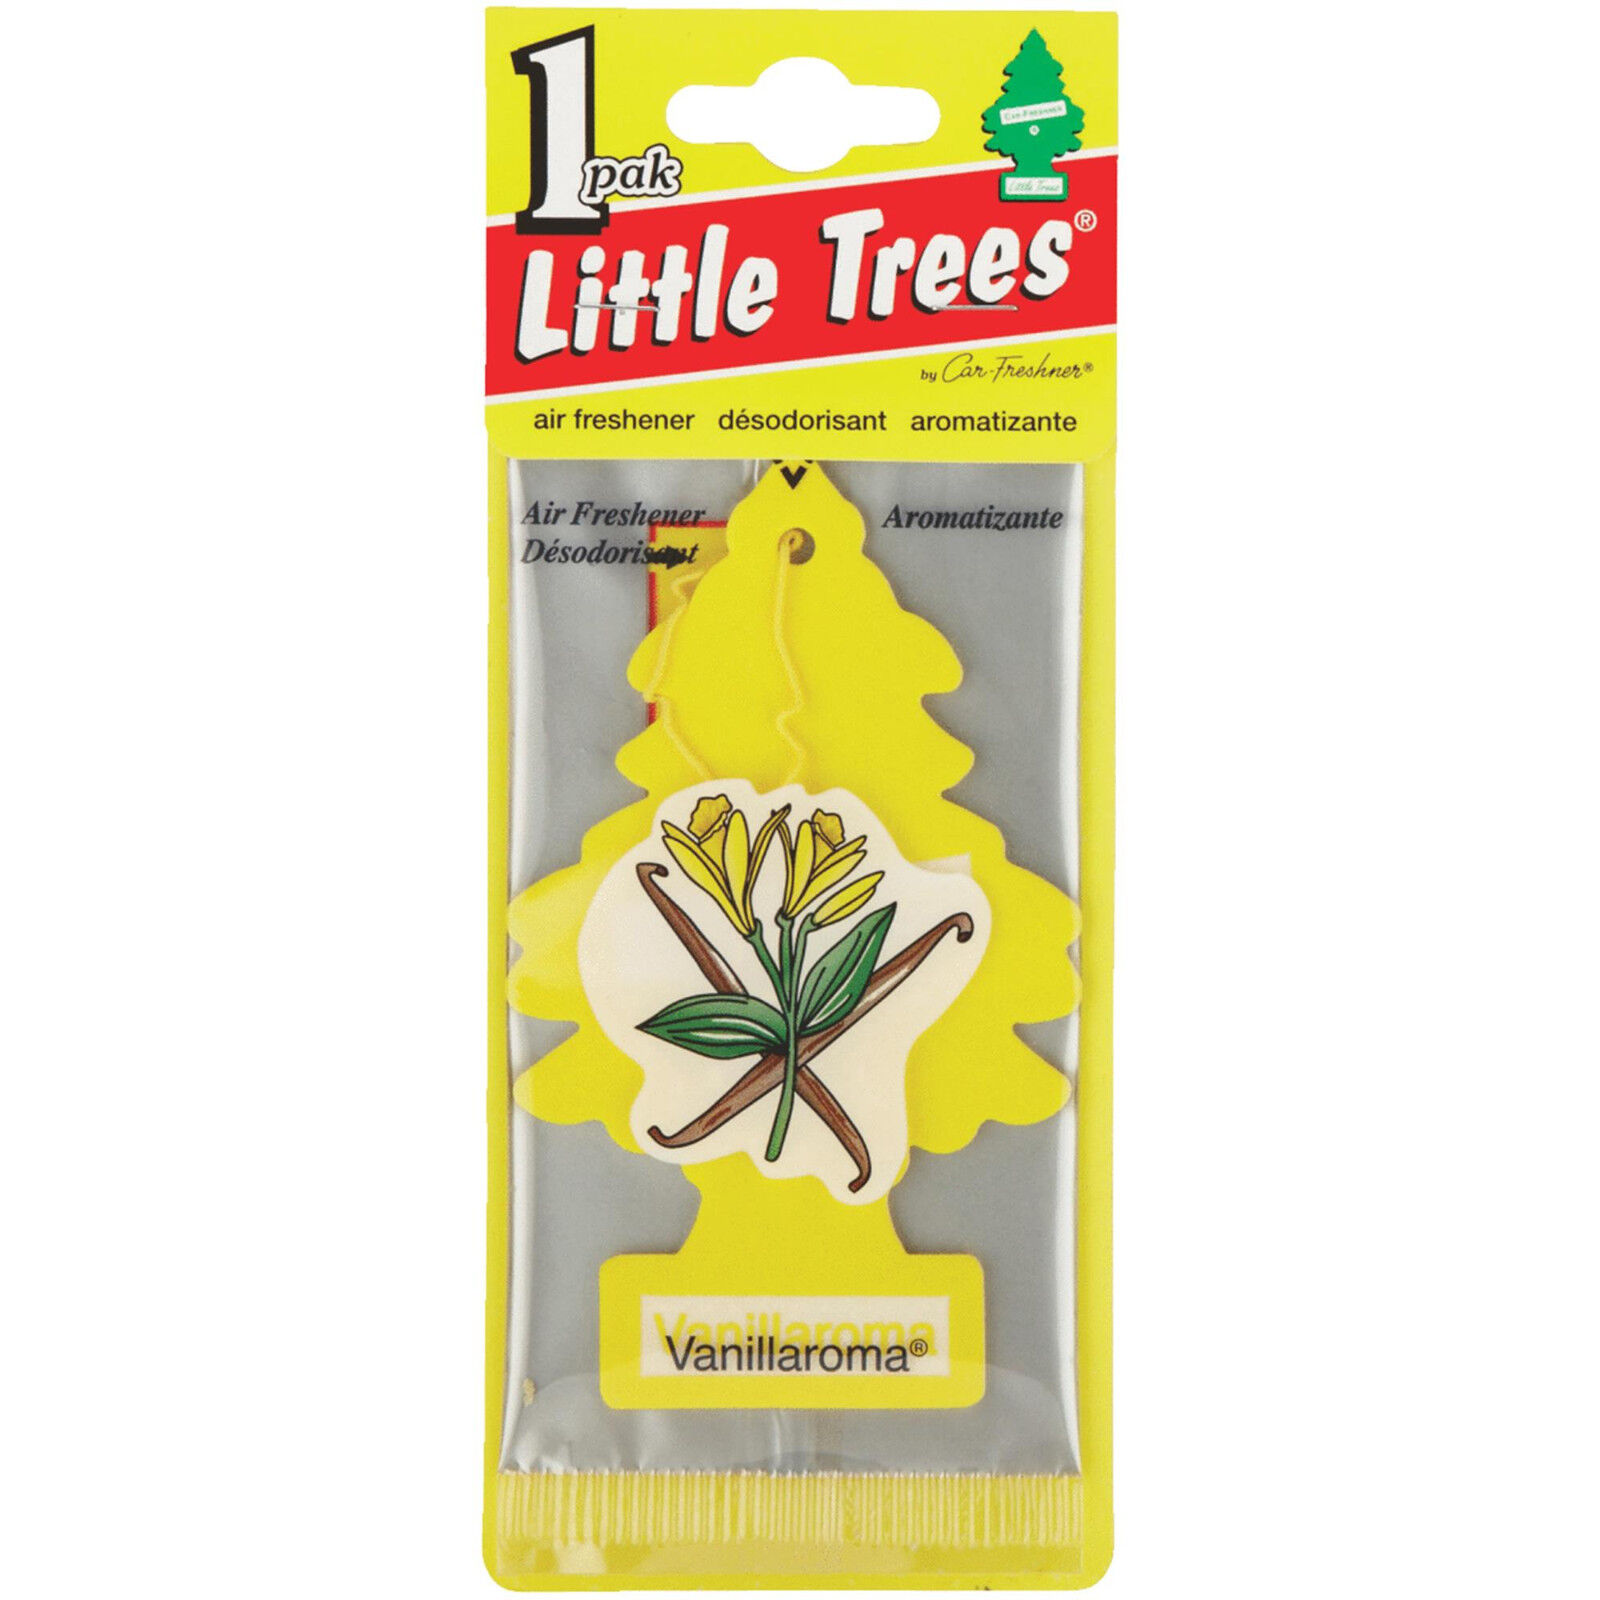  Freshener Vanillaroma  10105 Little Tree Vanilla Aroma  MADE IN USA Pack (24)  Little Trees U1P-10105 - фотография #10